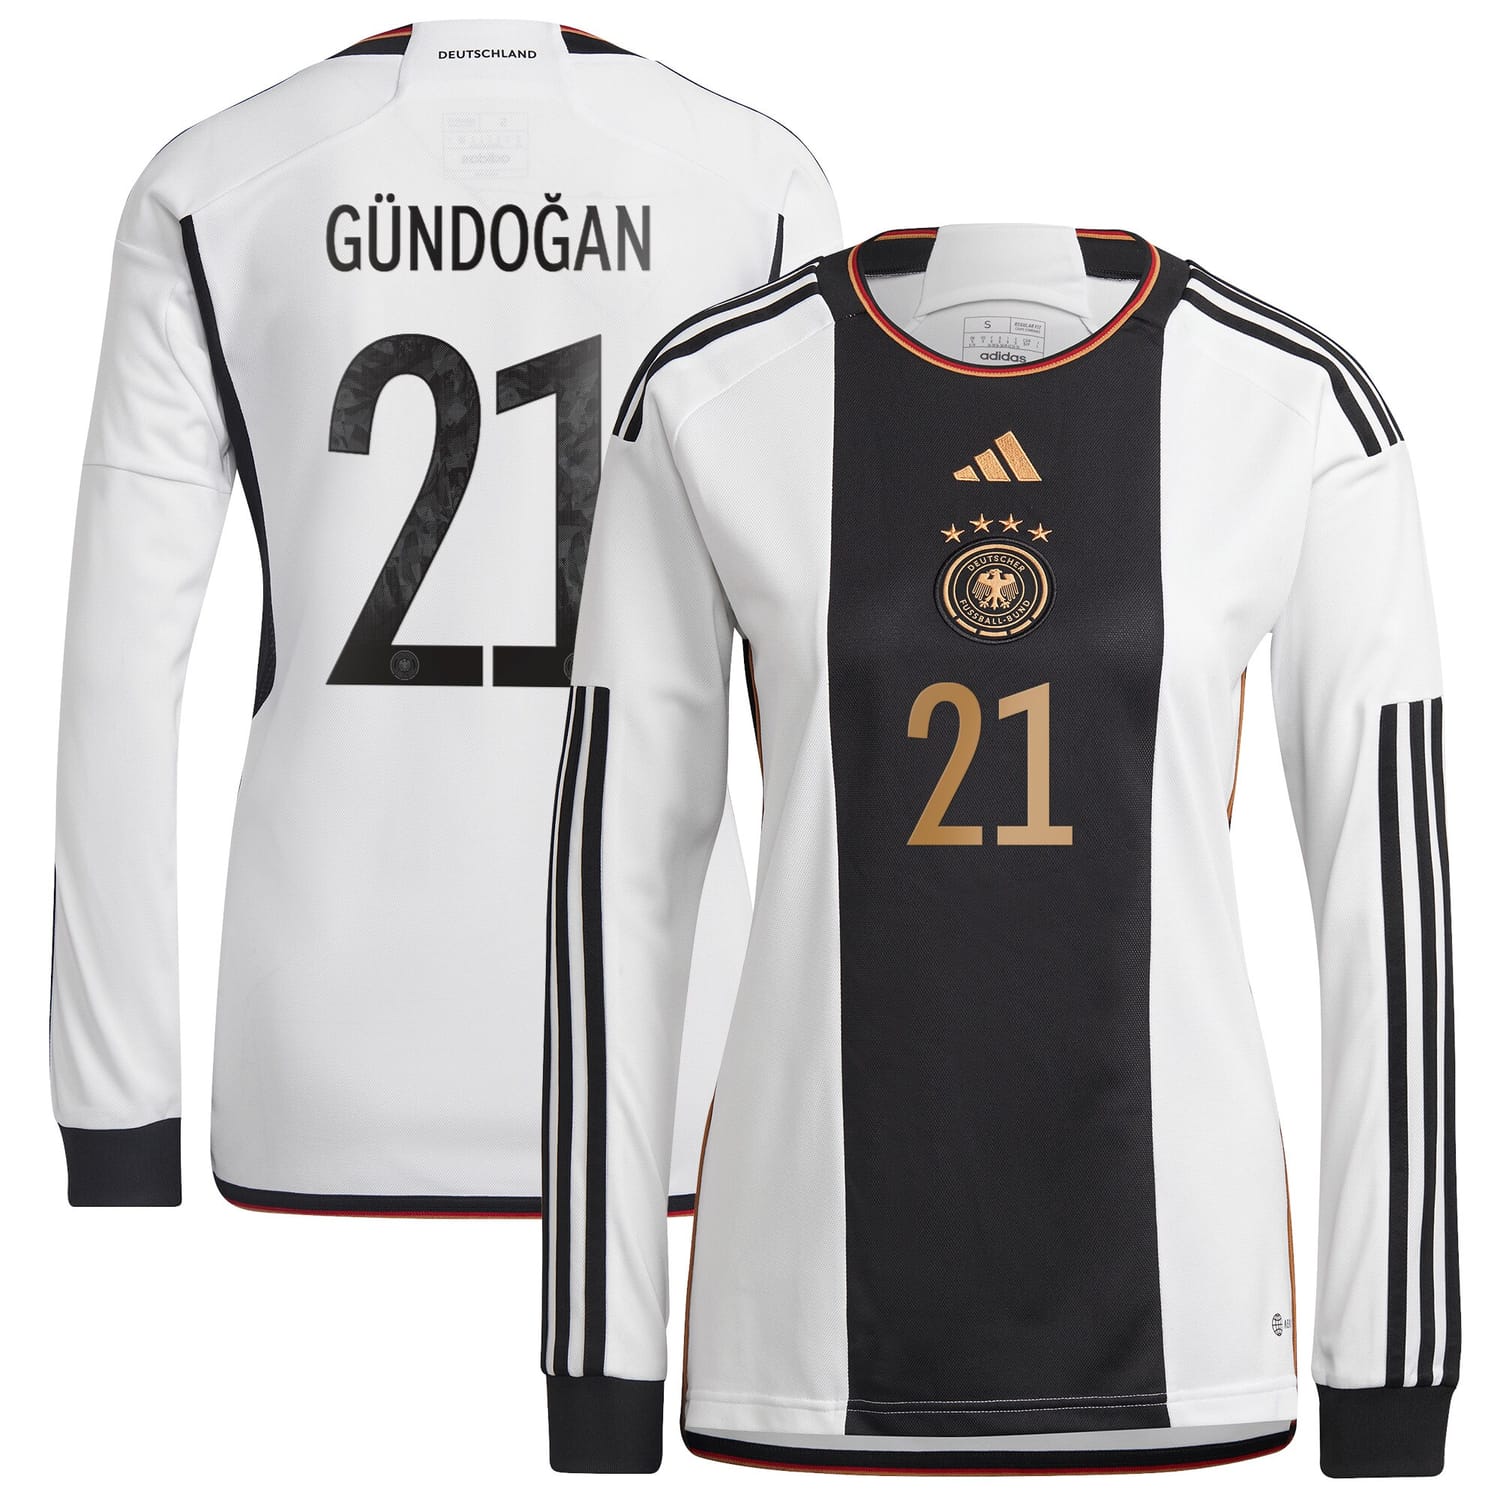 Germany National Team Home Jersey Shirt Long Sleeve player Ilkay Gündogan 21 printing for Women